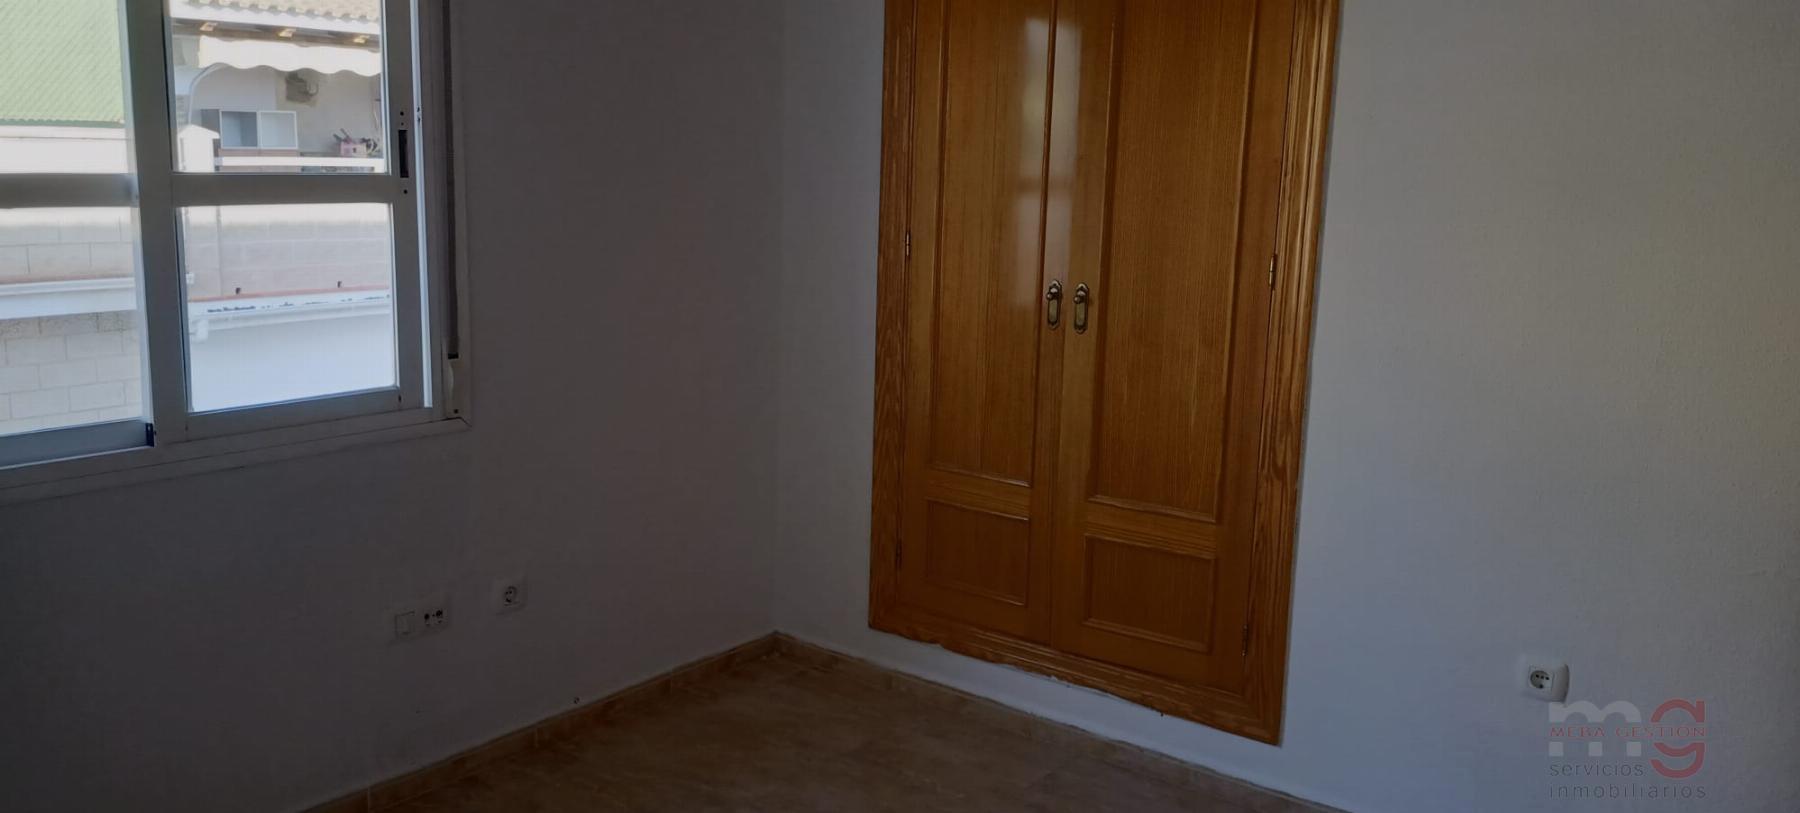 Venta de apartamento en Málaga